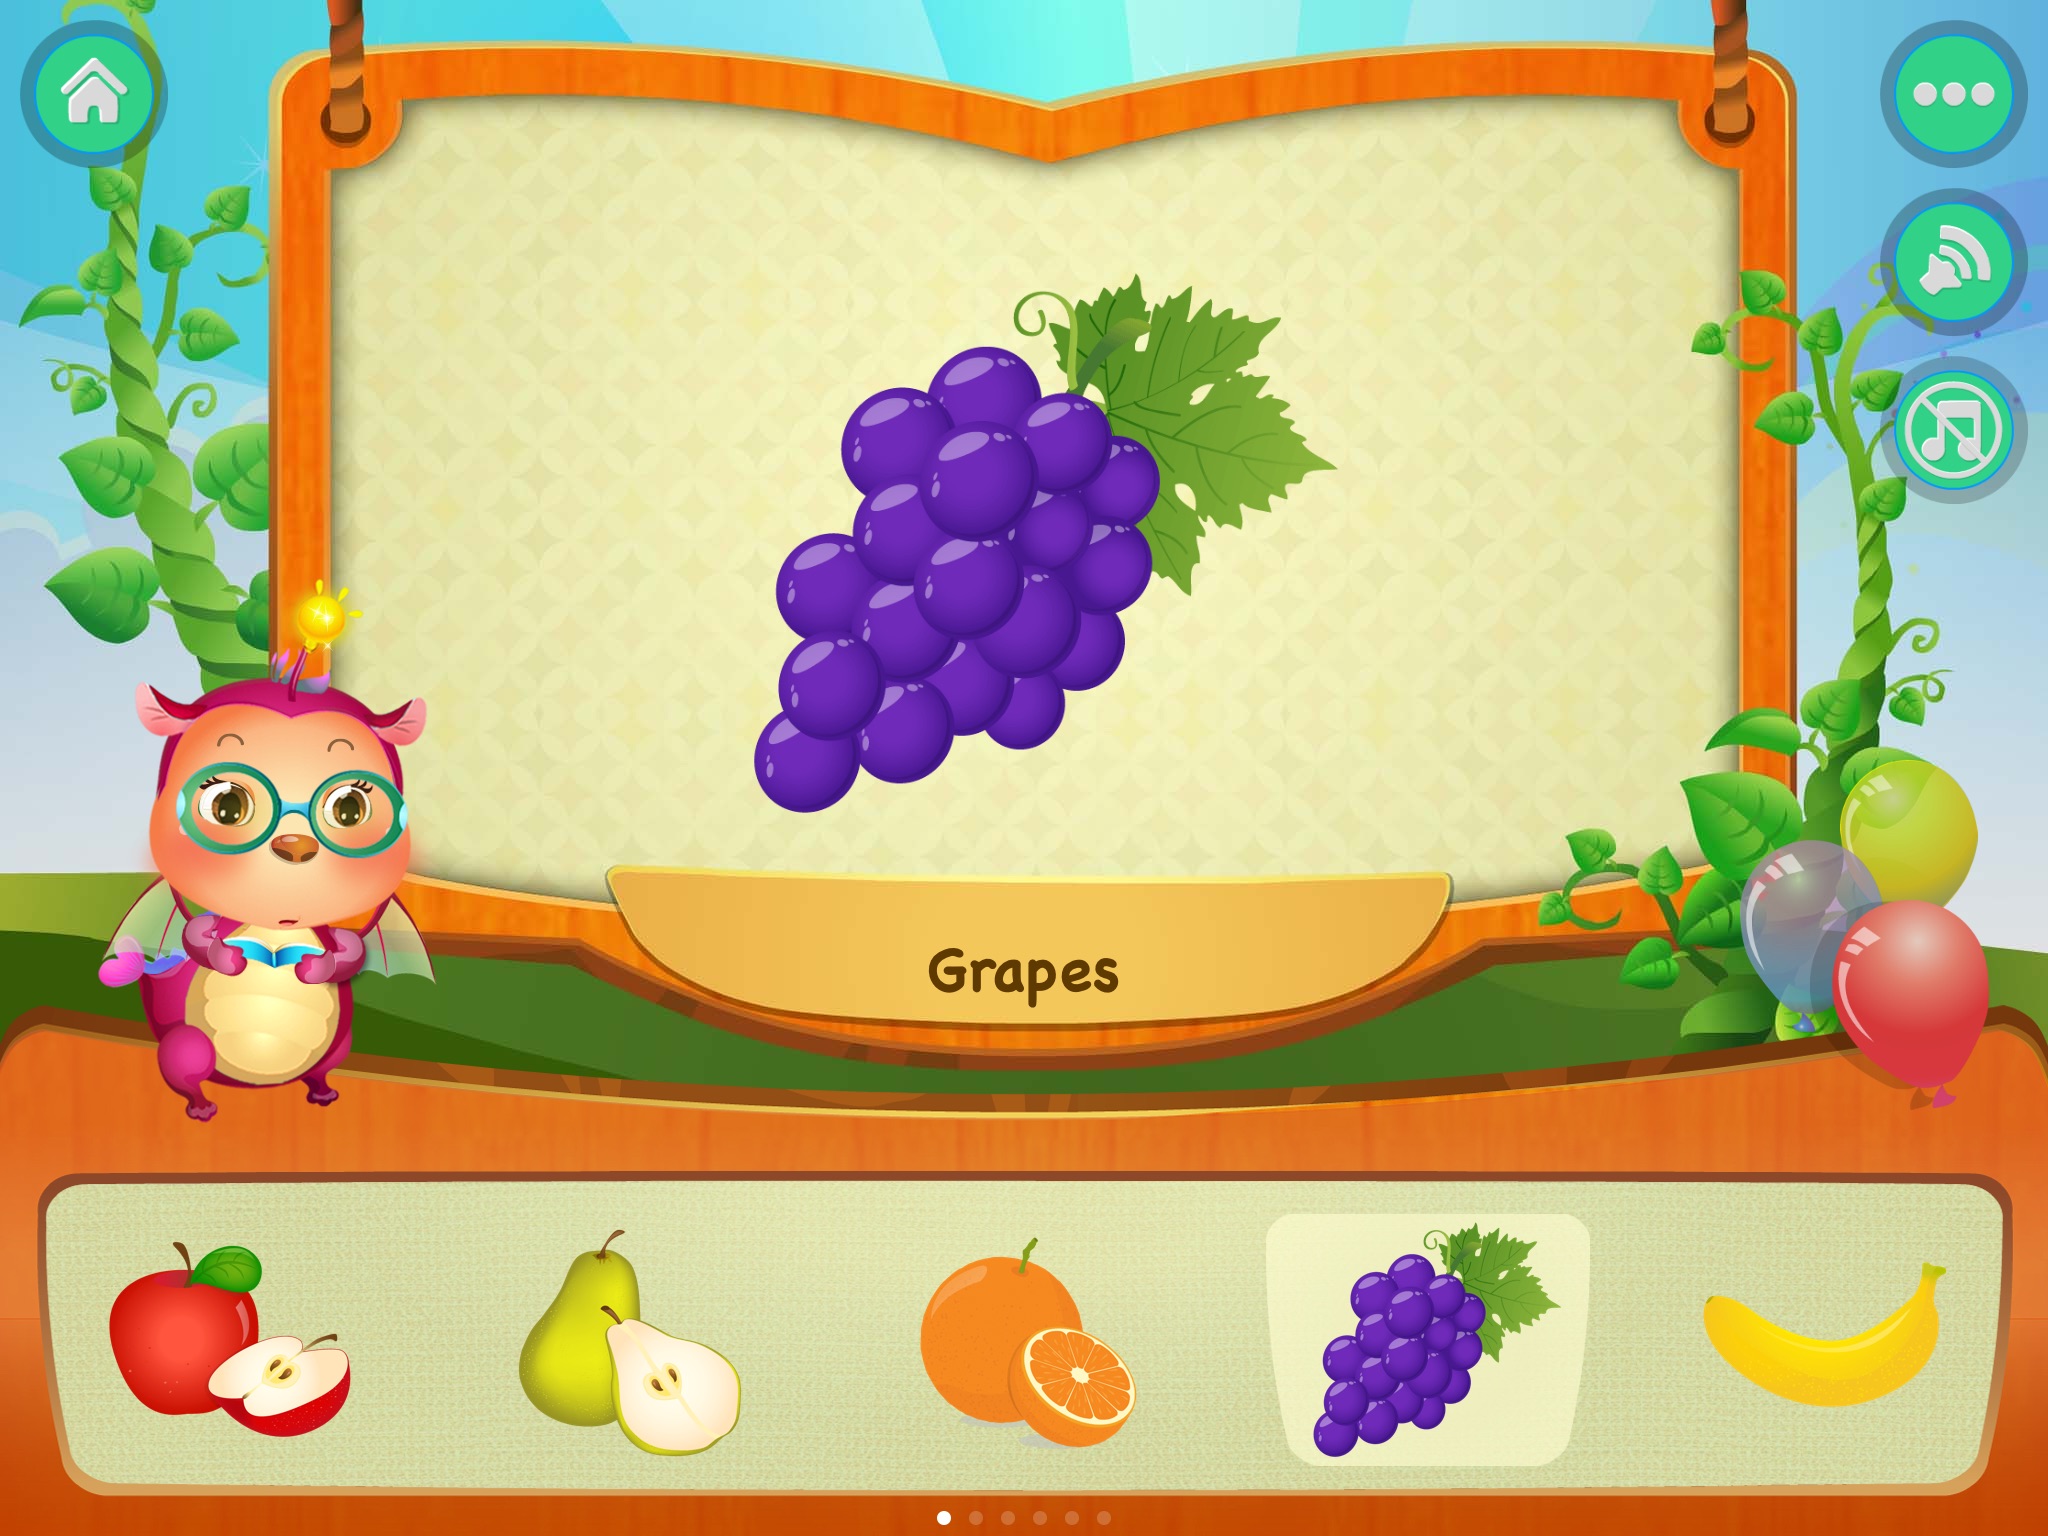 Preschool & Kindergarten Learning - 20 Education Games for Kids screenshot 2